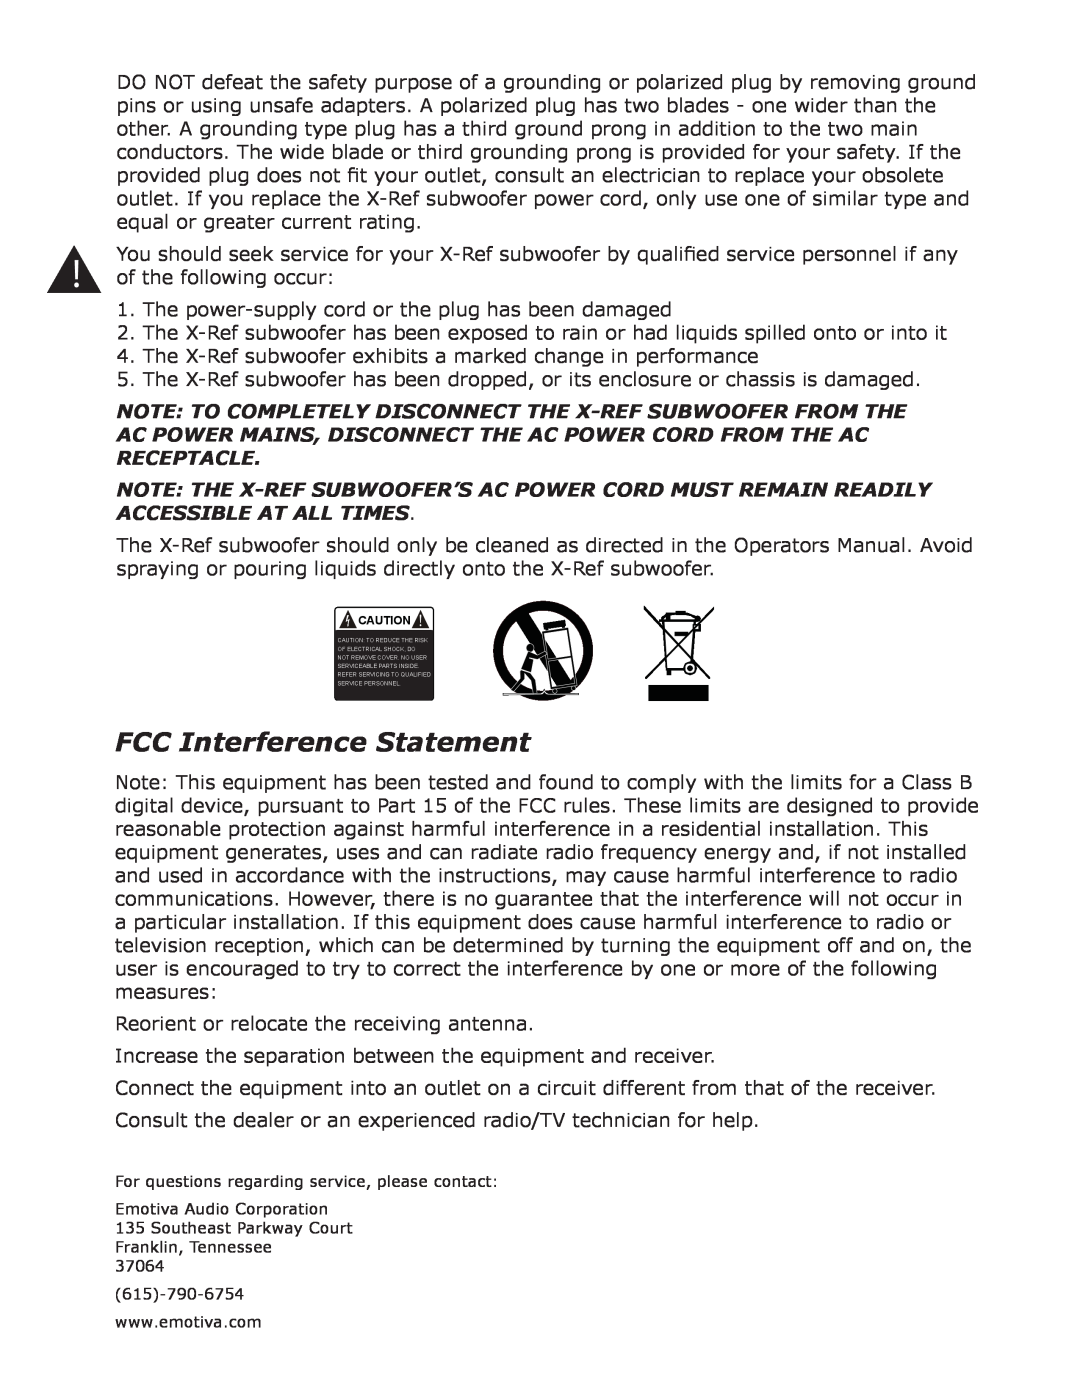 Emotiva X-Ref 12 user manual FCC Interference Statement 